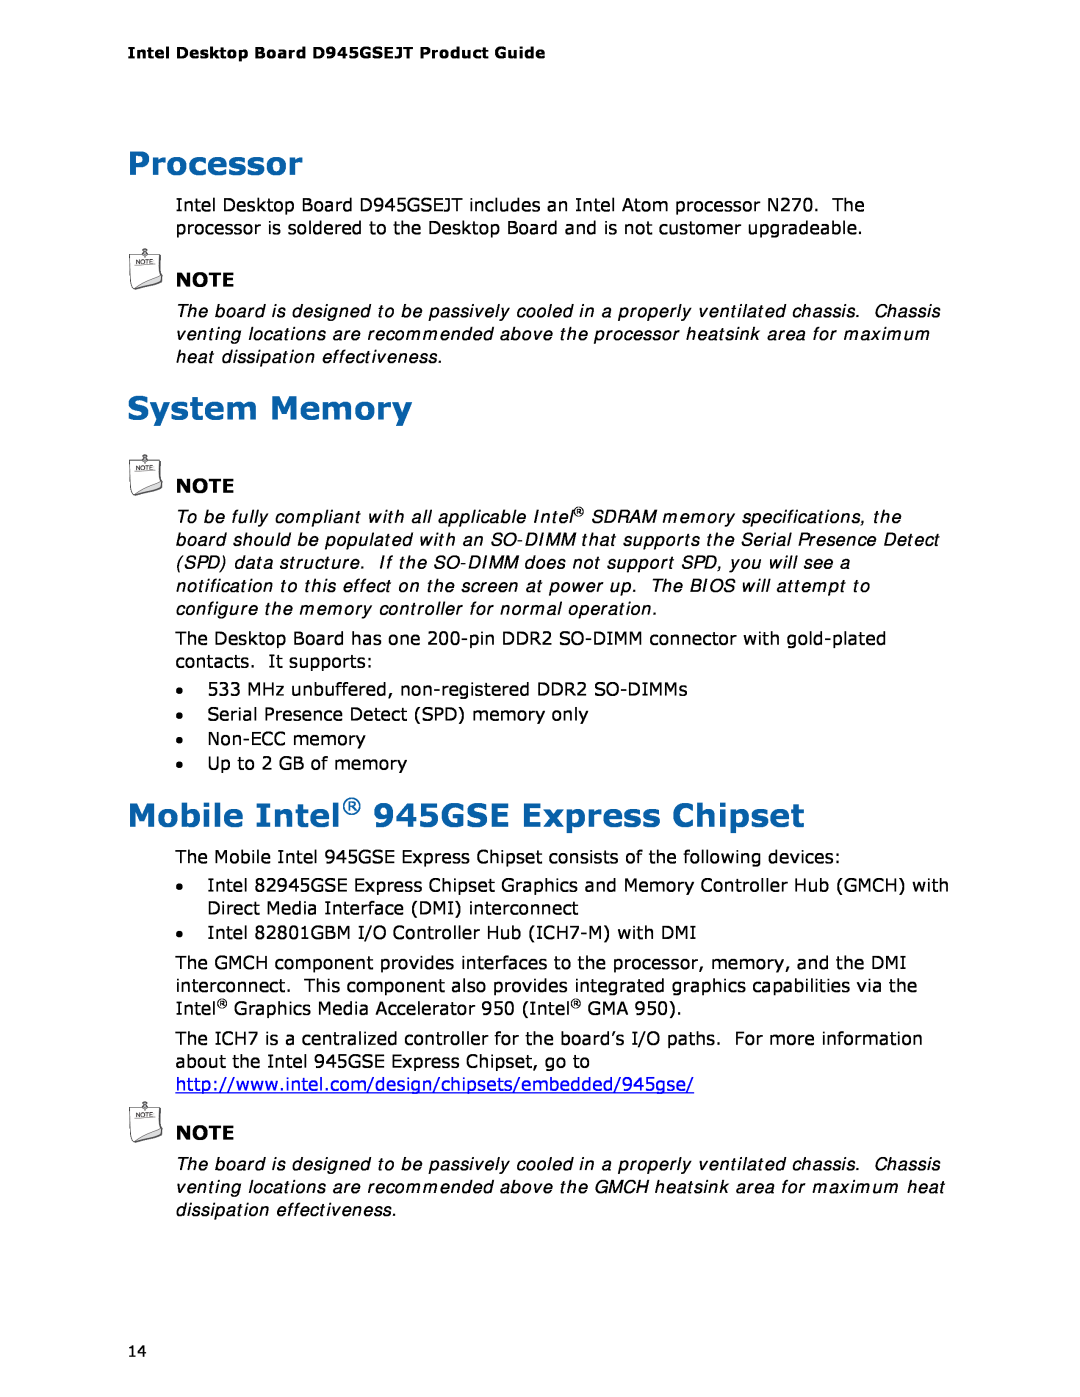 Intel D945GSEJT manual Processor, System Memory, Mobile Intel 945GSE Express Chipset 